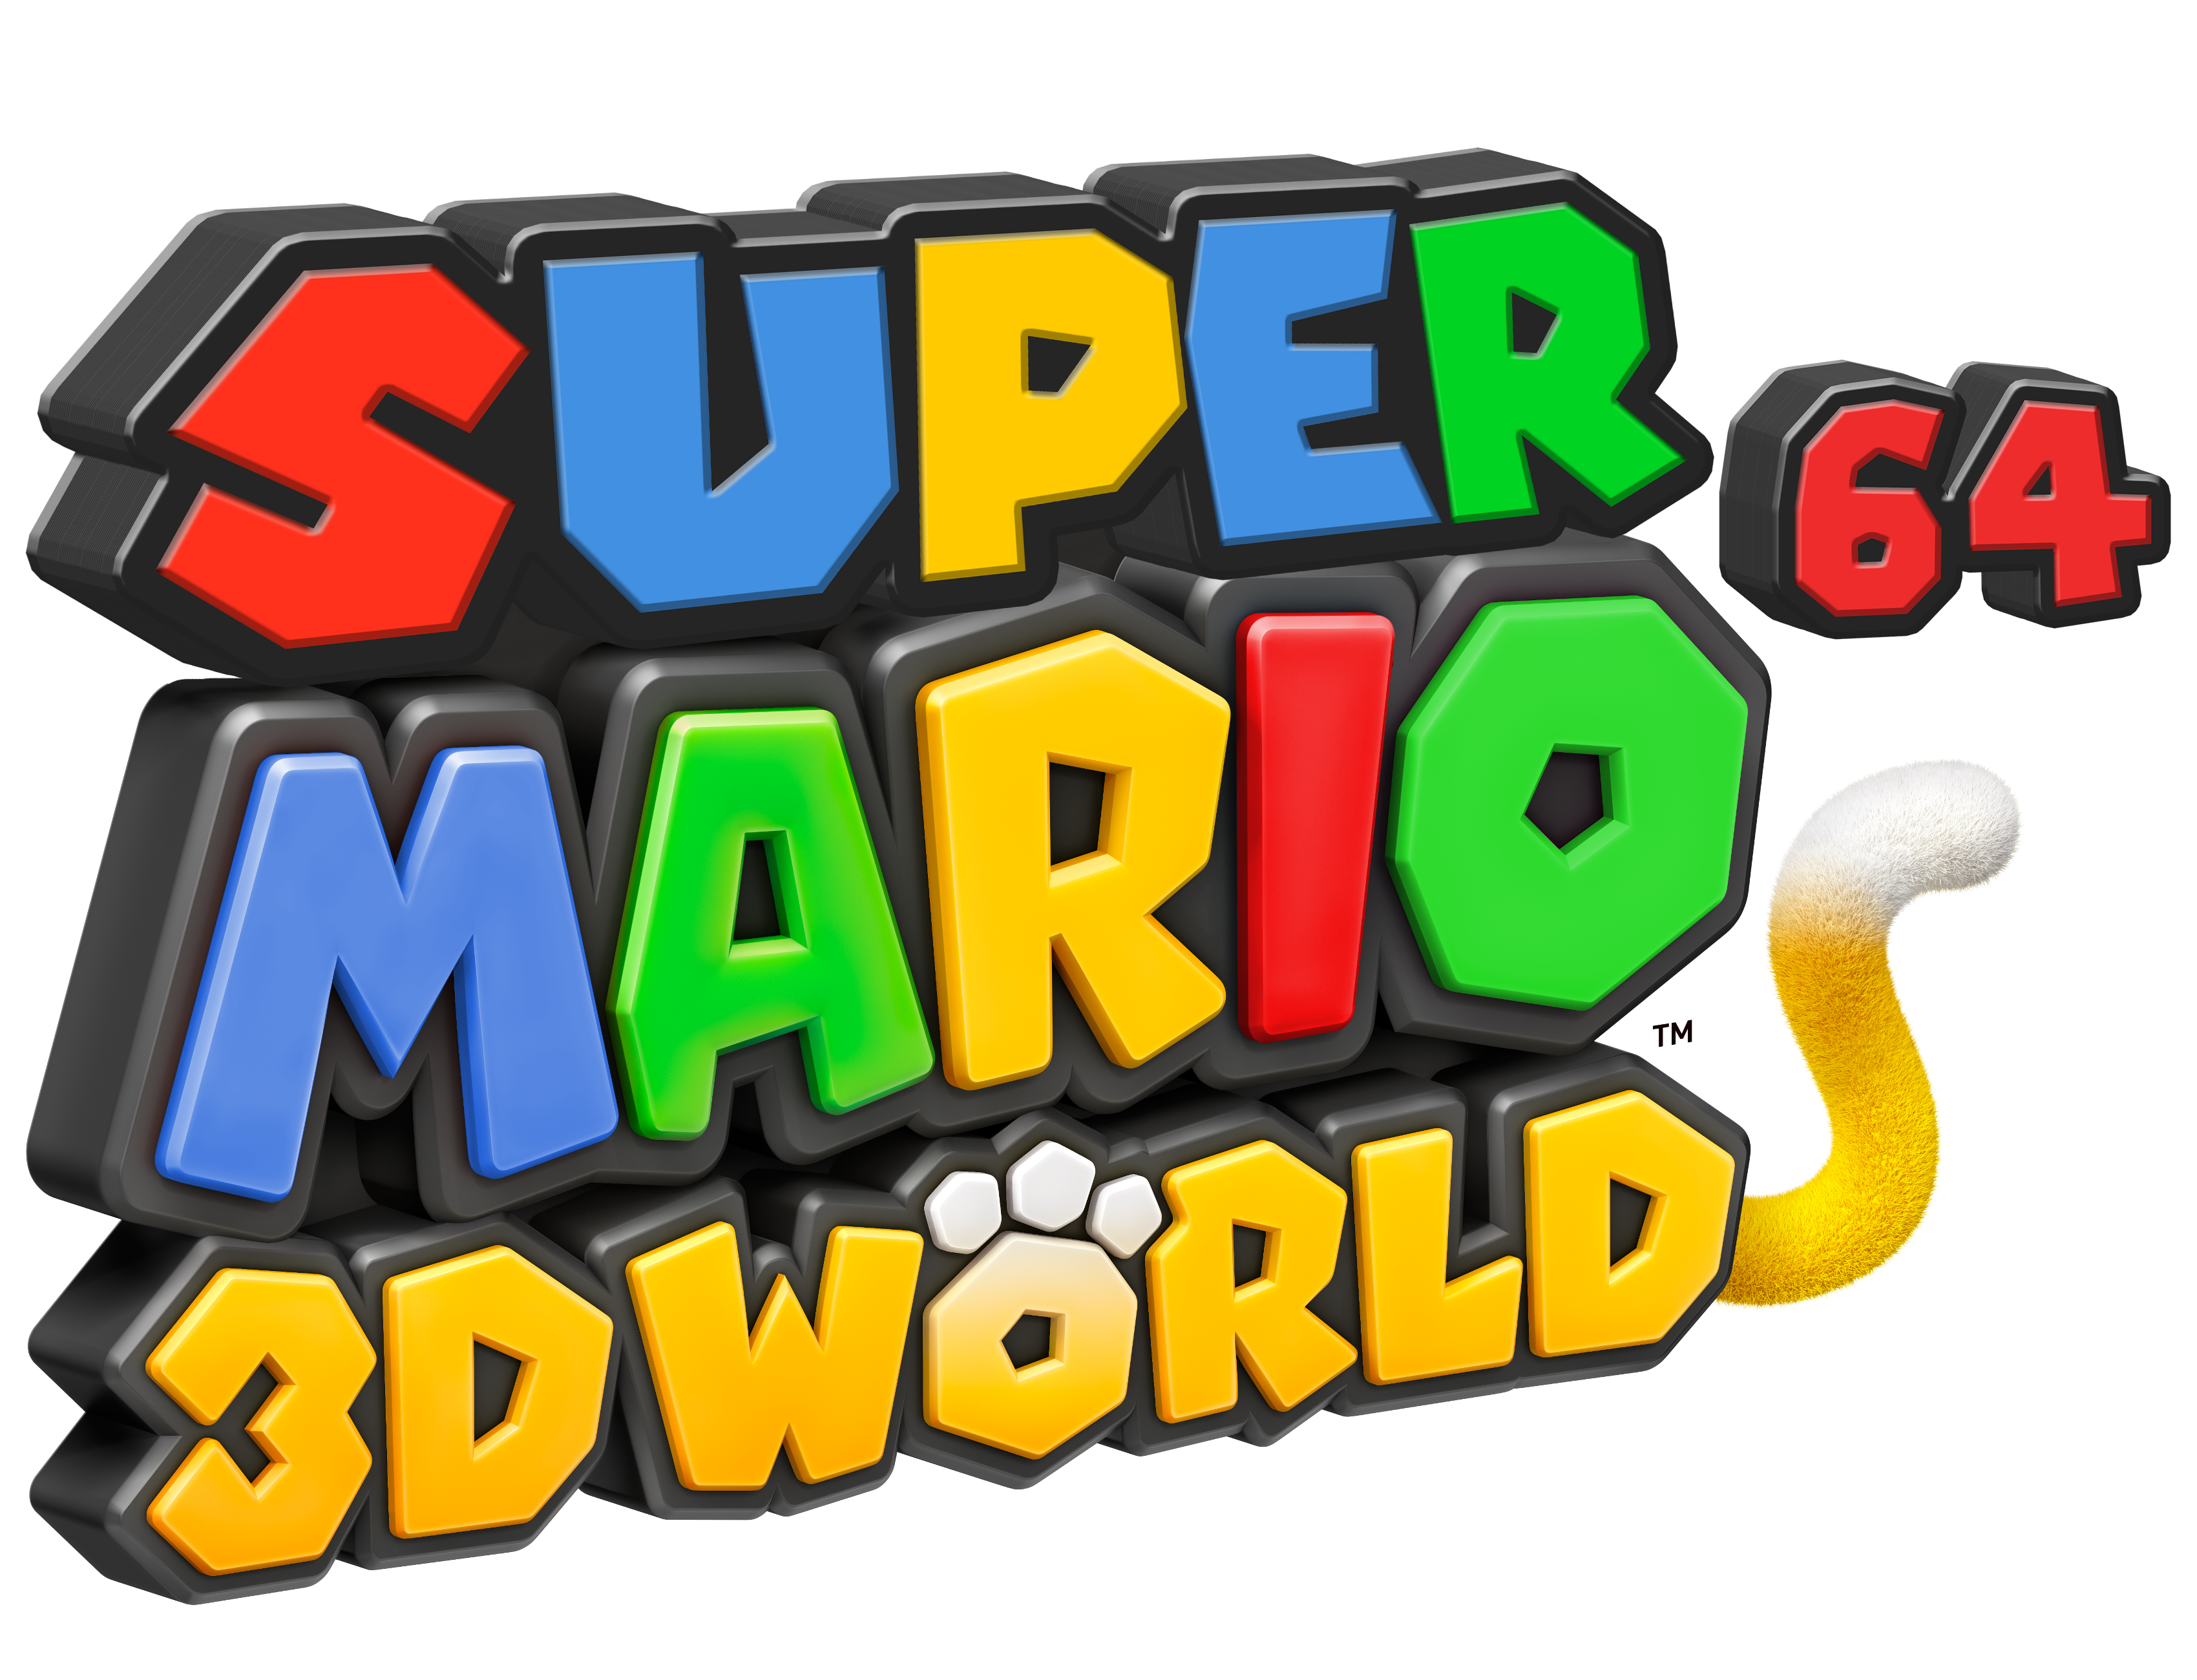 super mario 3d world 64